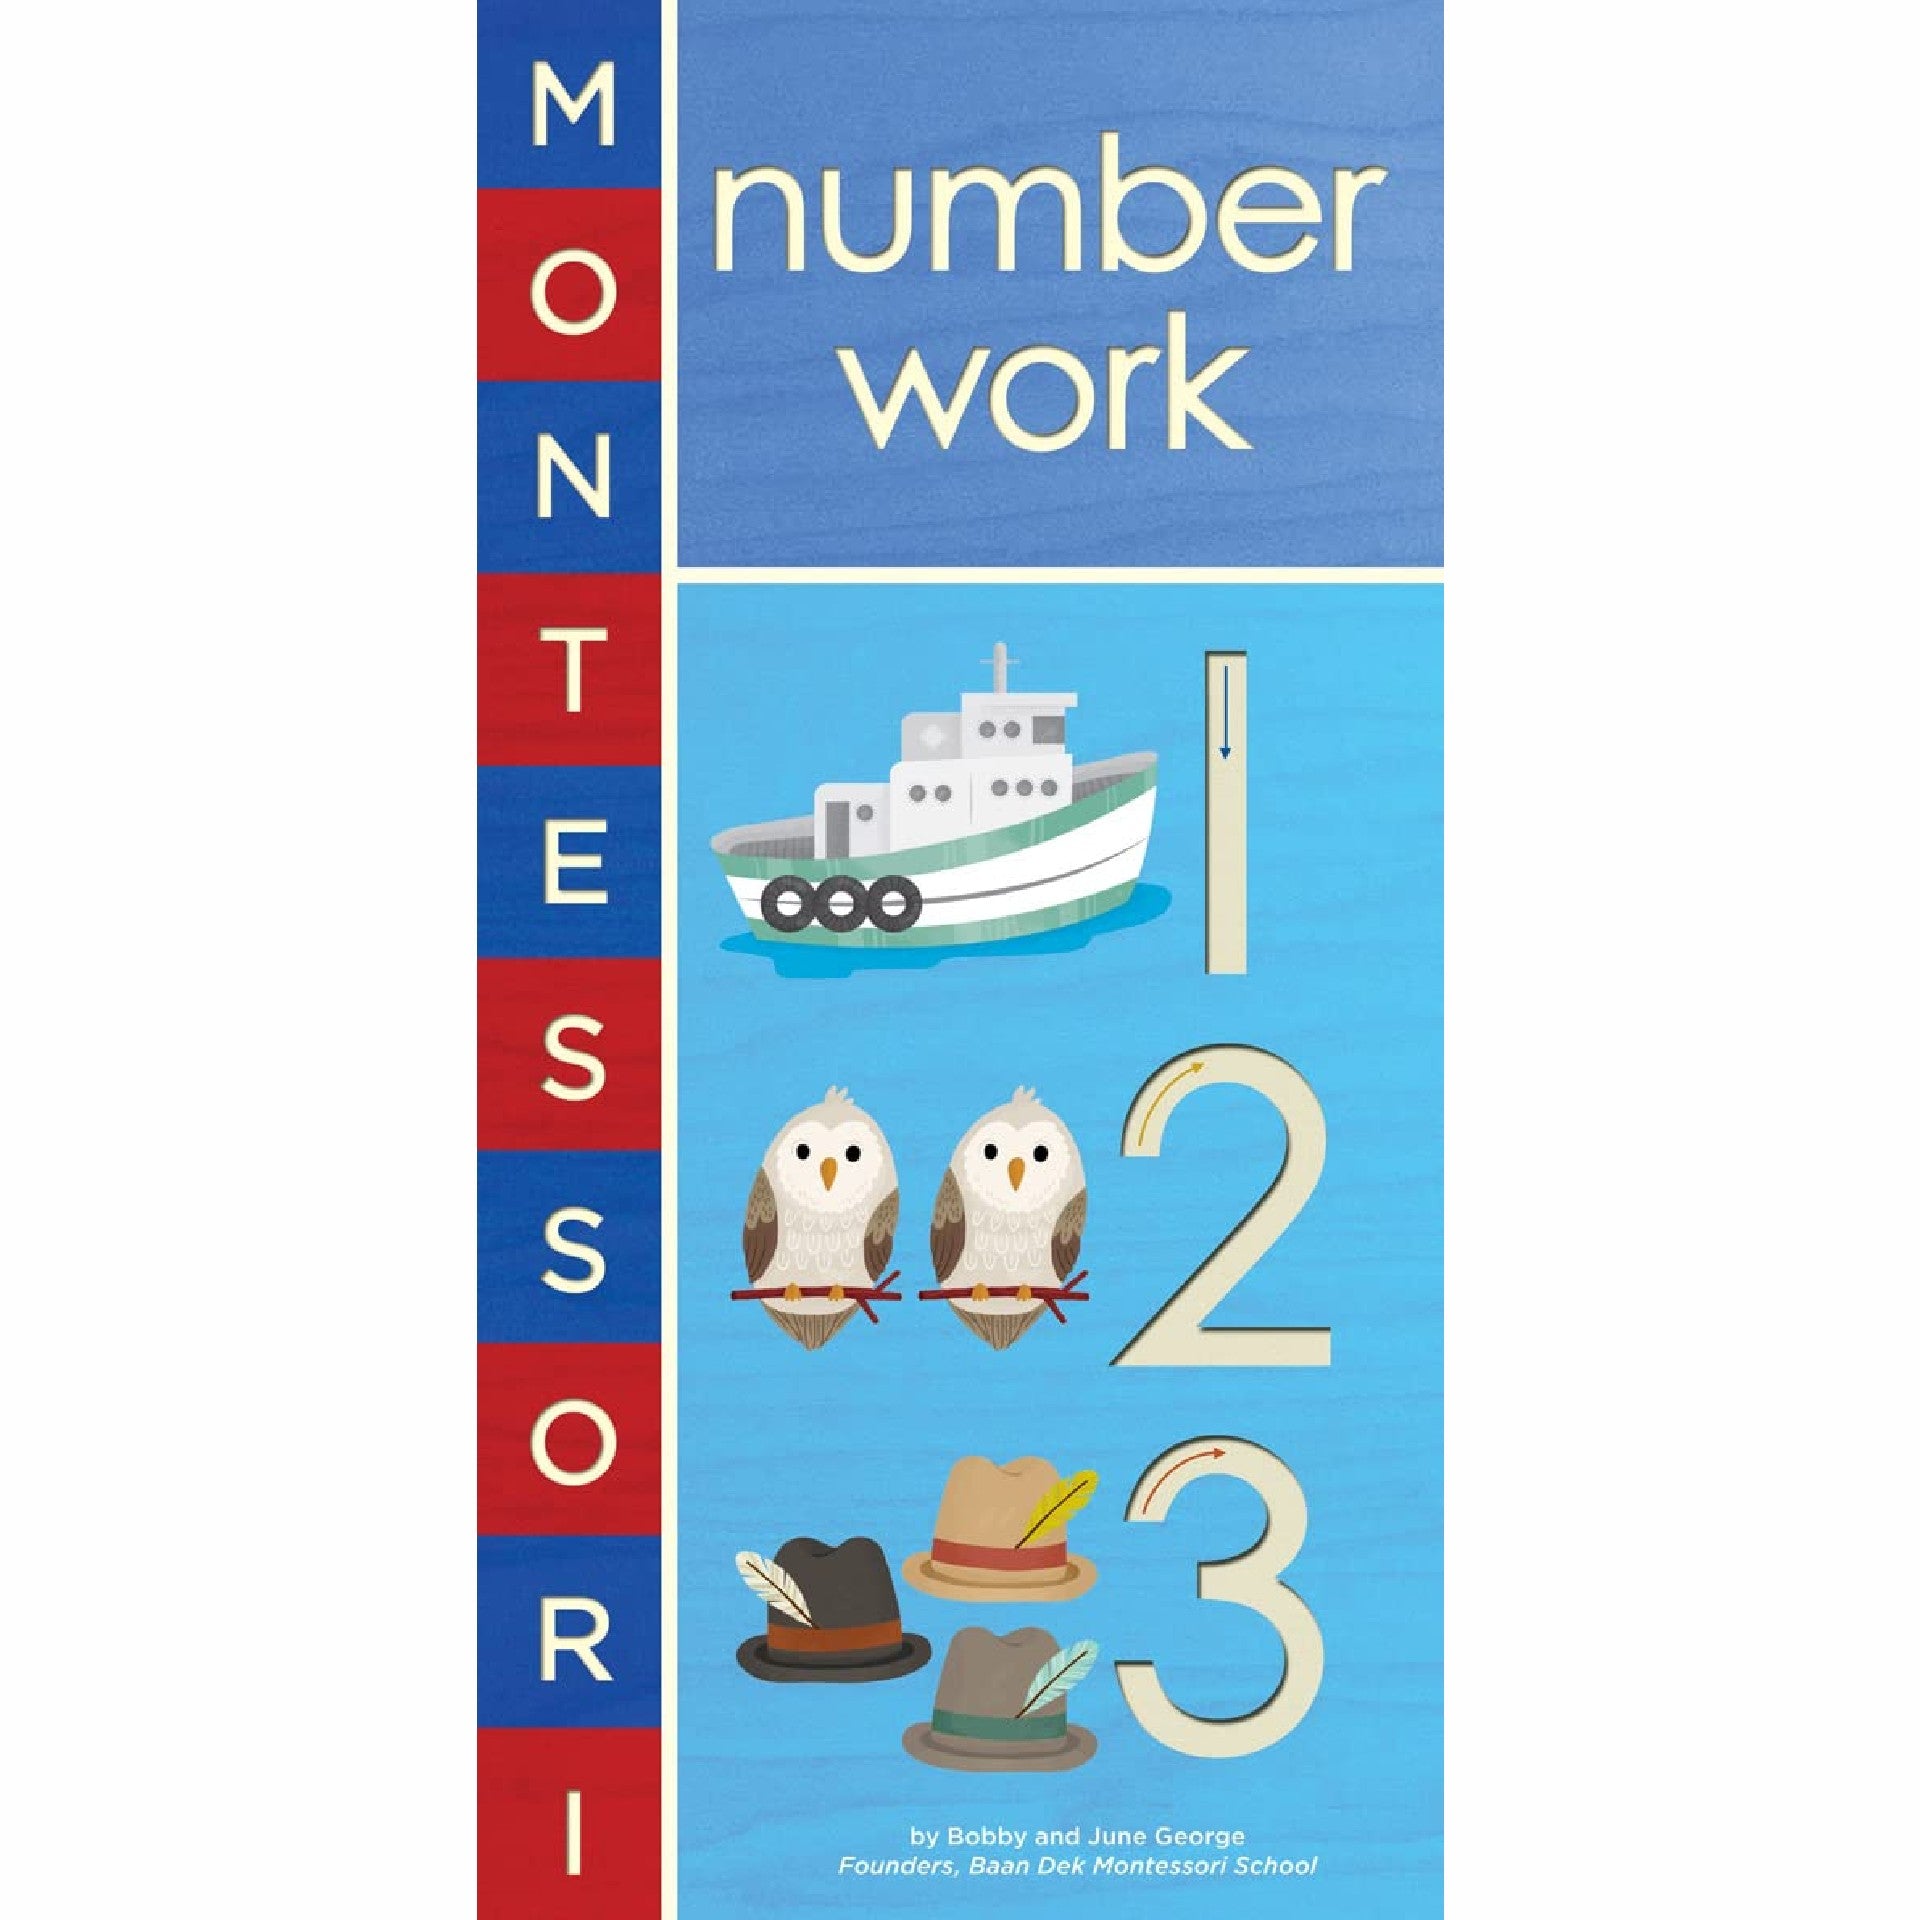 Montessori: Number Work